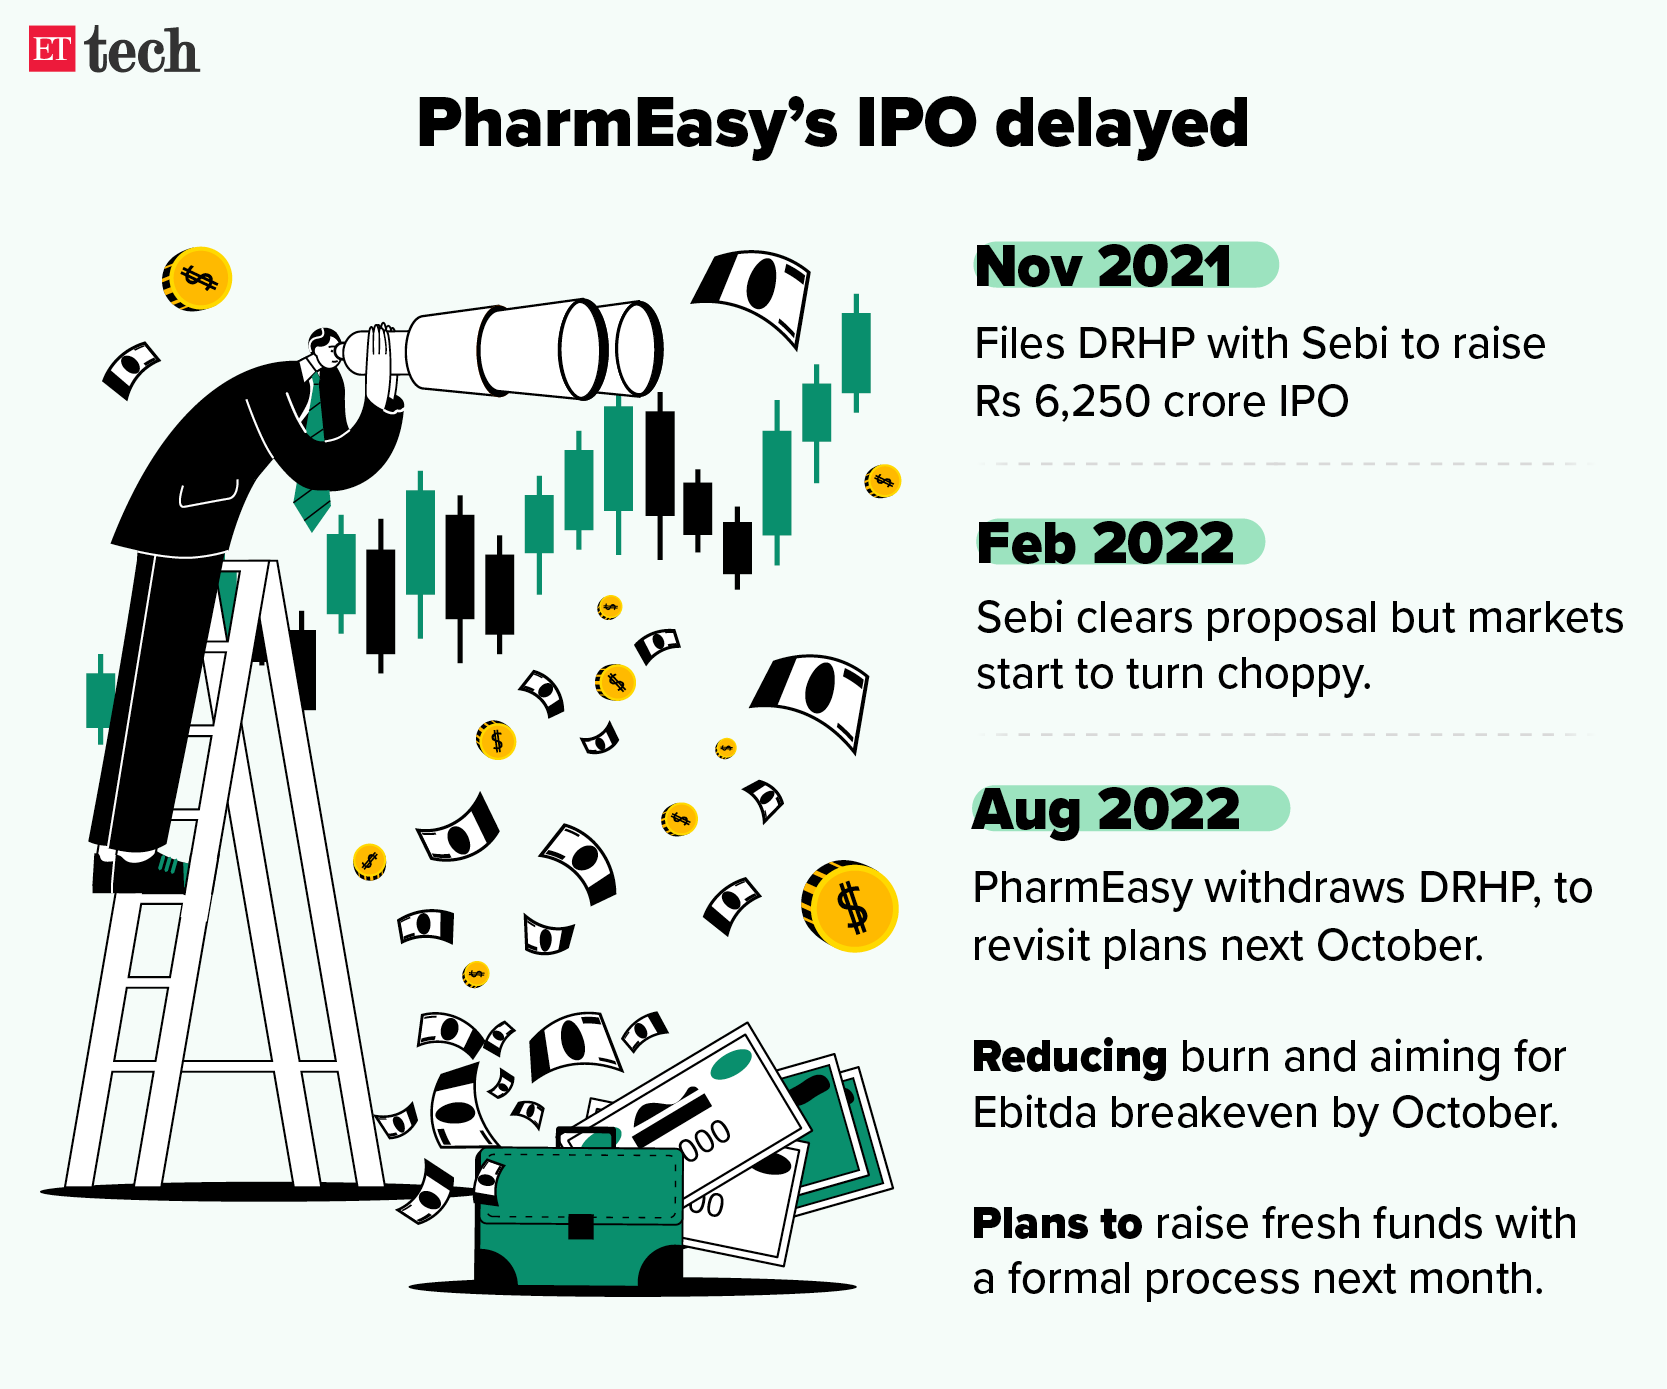 PharmEasy rejigs IPO plans